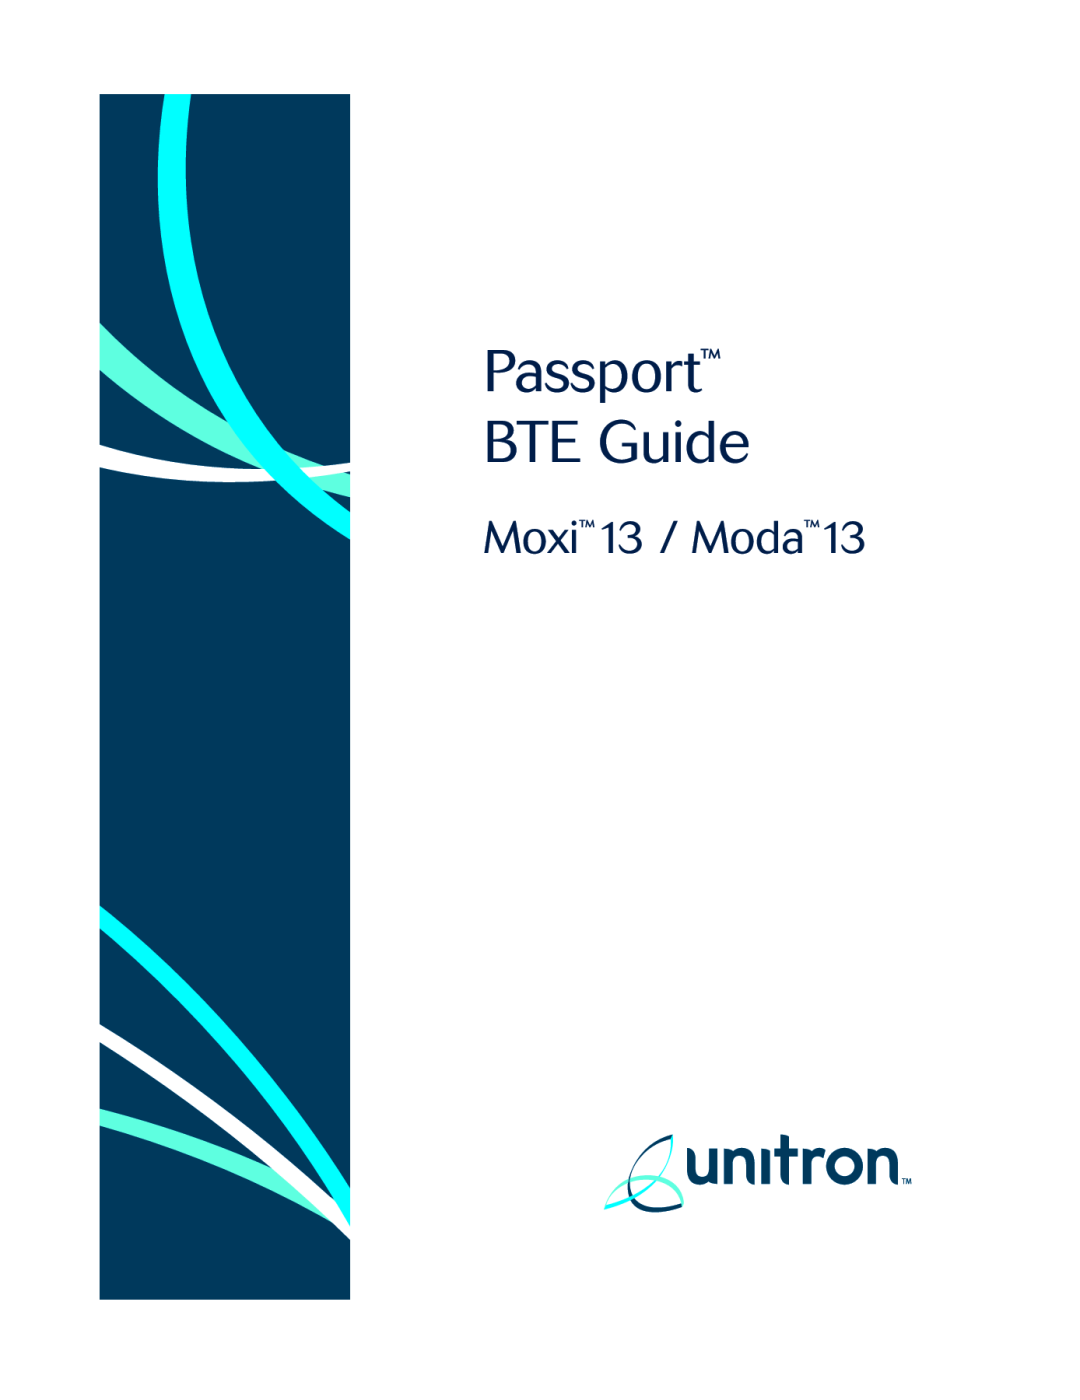 Unitron Hearing Aid Moda 13, Moxi 13 manual Passport BTE Guide, Moxi13 / Moda13 